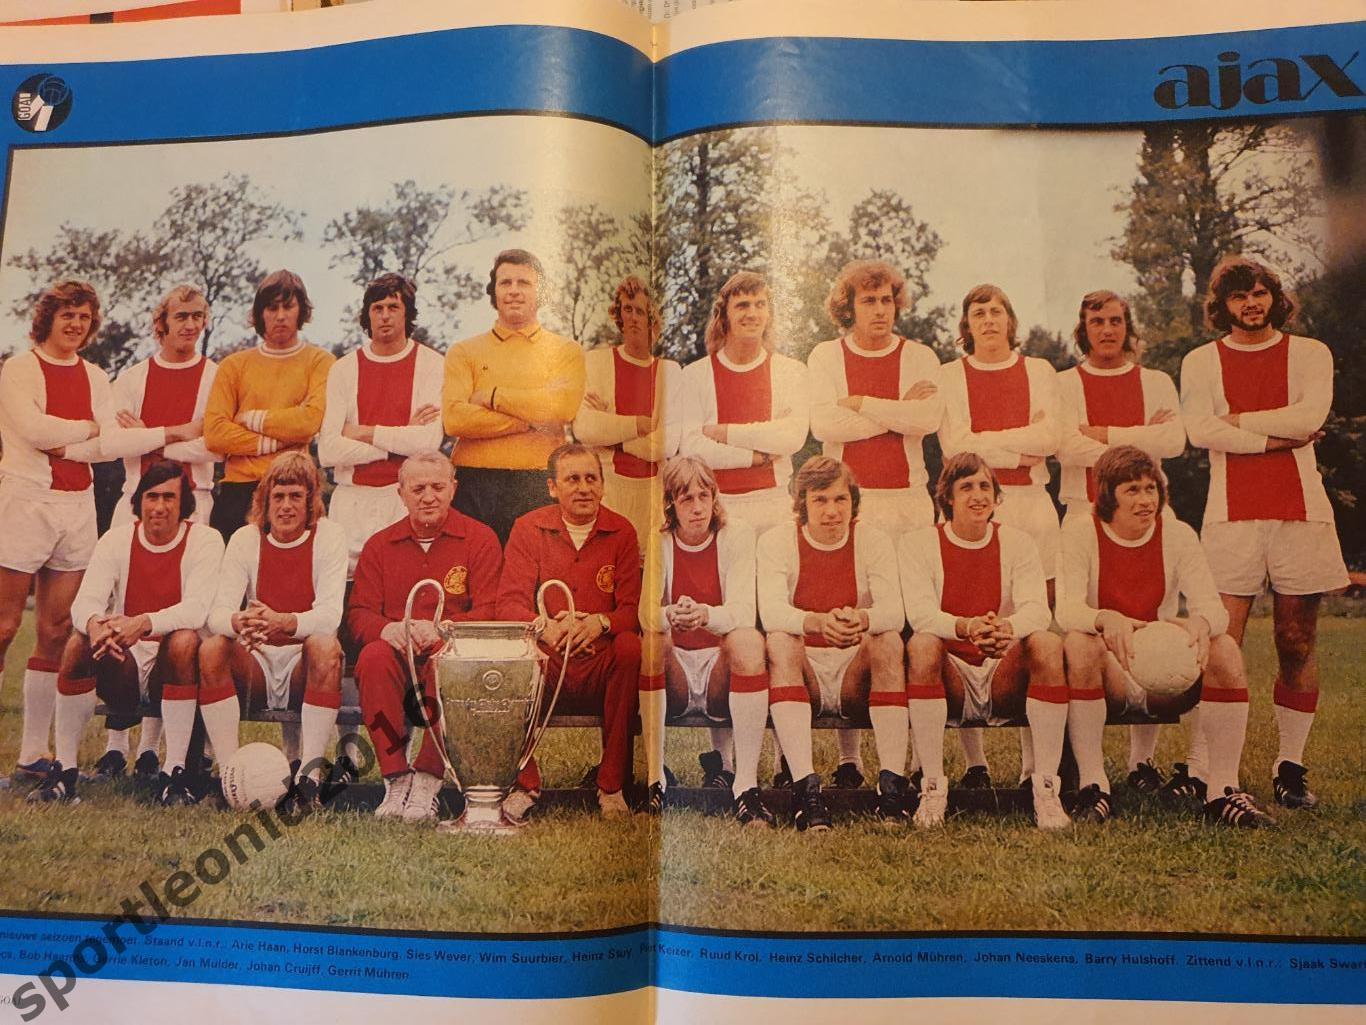 Voetbal International 1972.20 топ выпусков .1